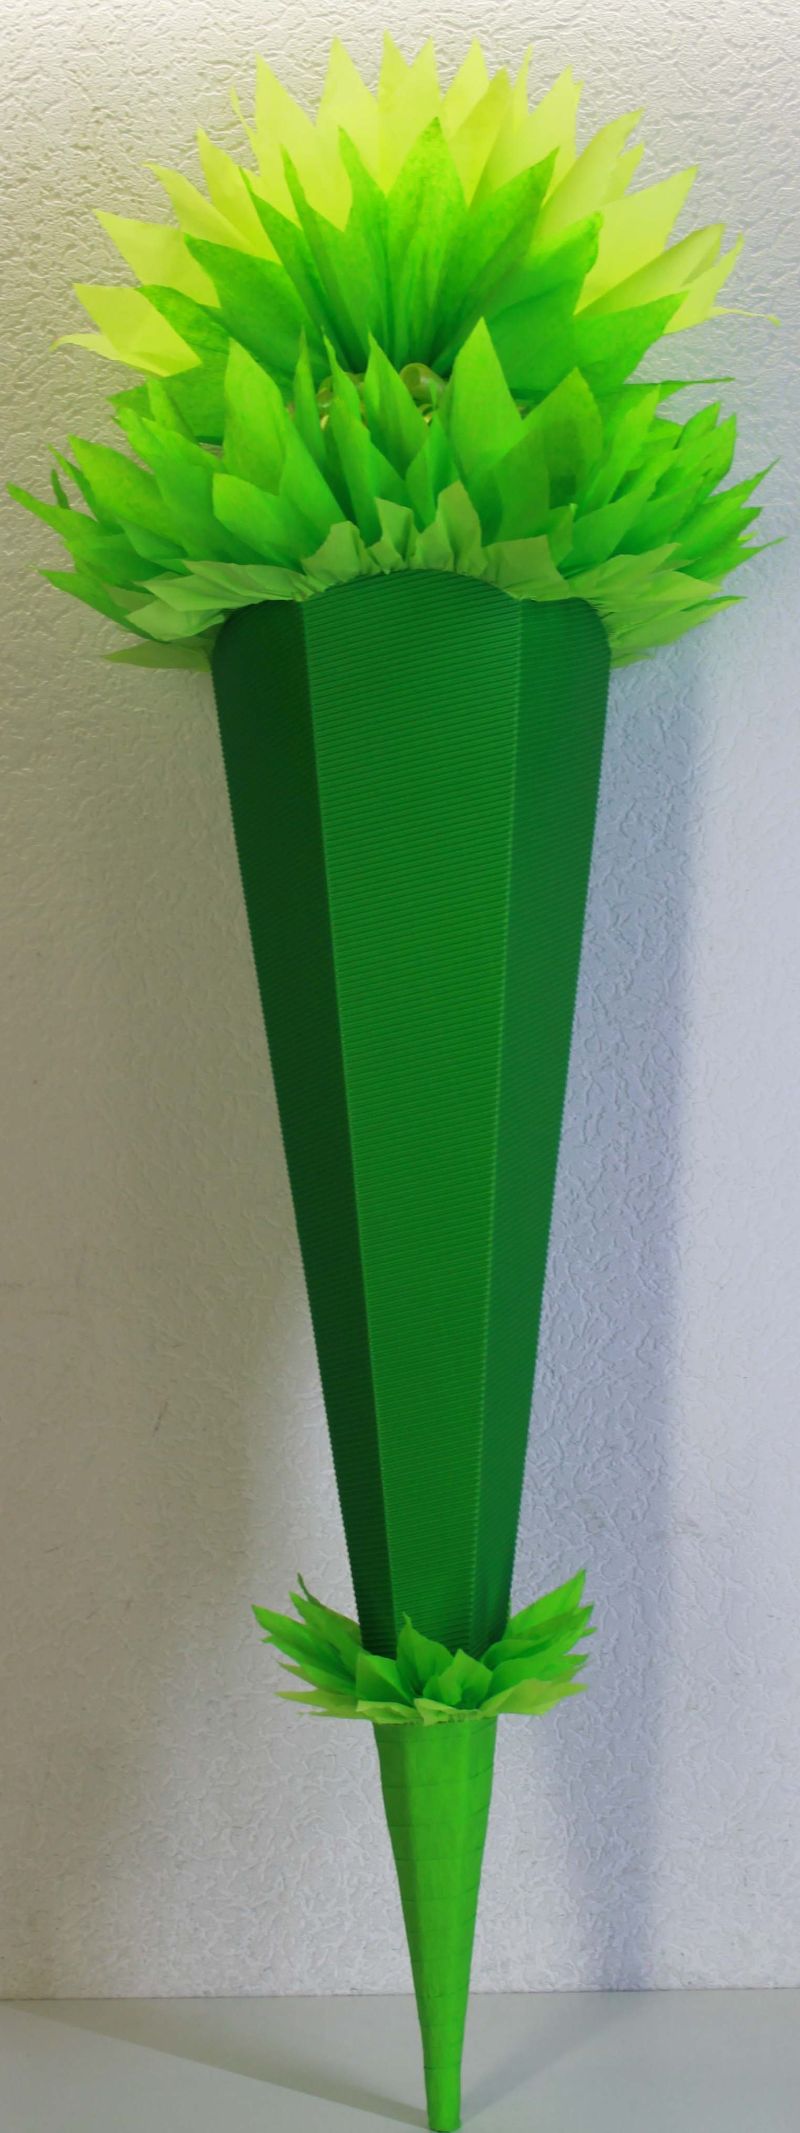  - Schultüte Zuckertüte Rohling zum selbst verzieren Rohling 70 75 80 85 90 100 cm / 1m für Jungen HANDARBEIT grün hellgrün